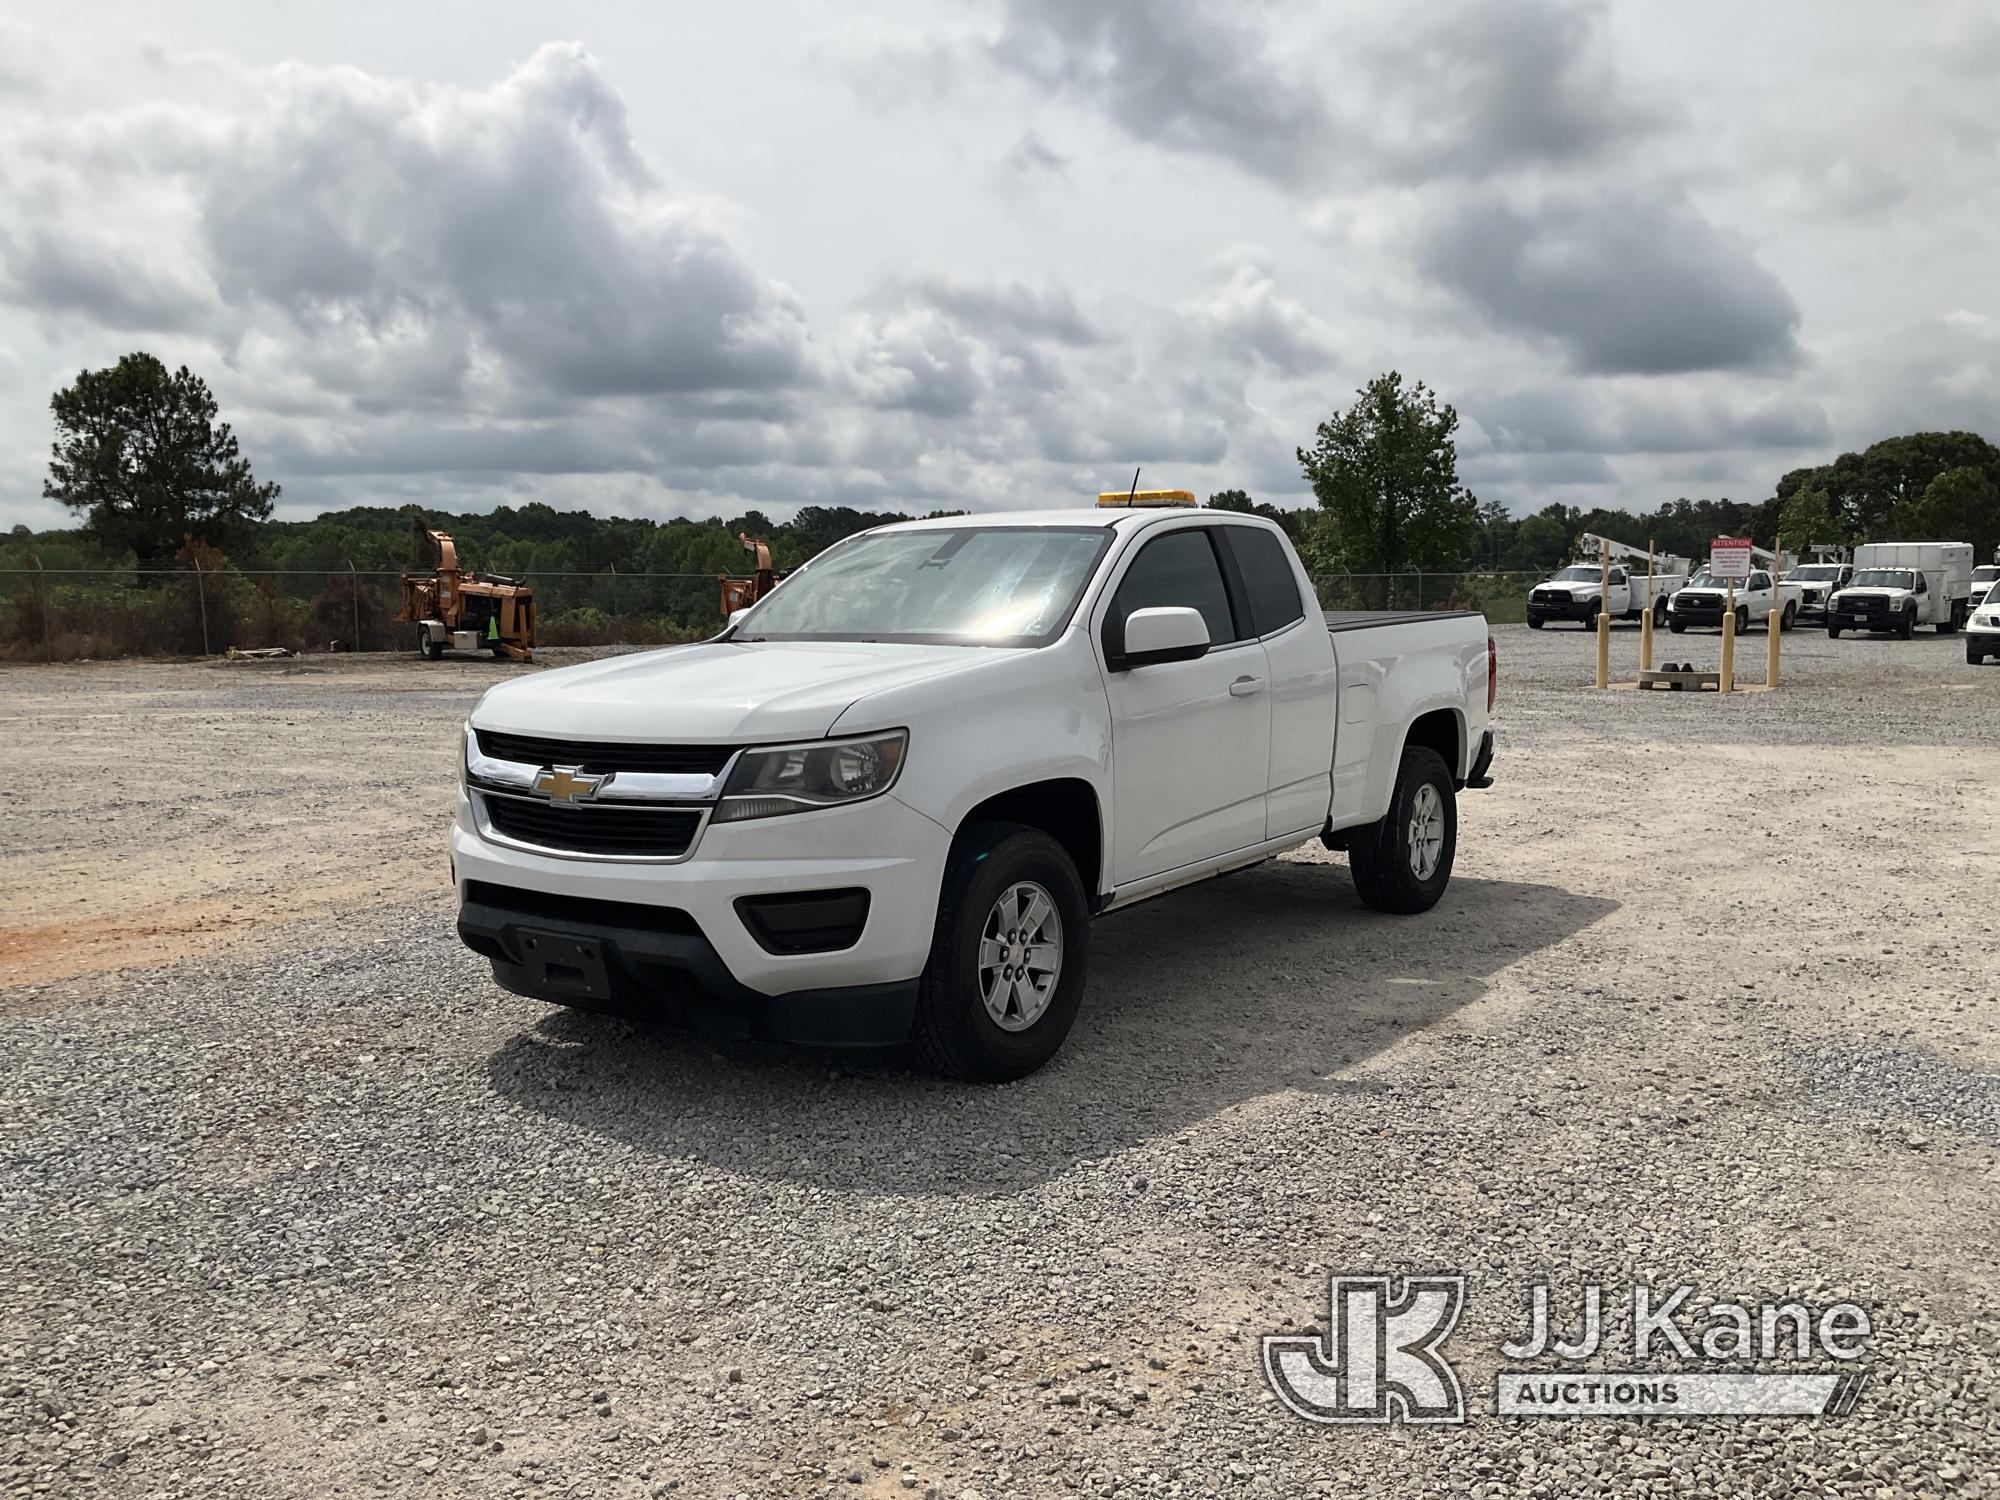 (Villa Rica, GA) 2016 Chevrolet Colorado Extended-Cab Pickup Truck Runs & Moves) (Seller States: Tra